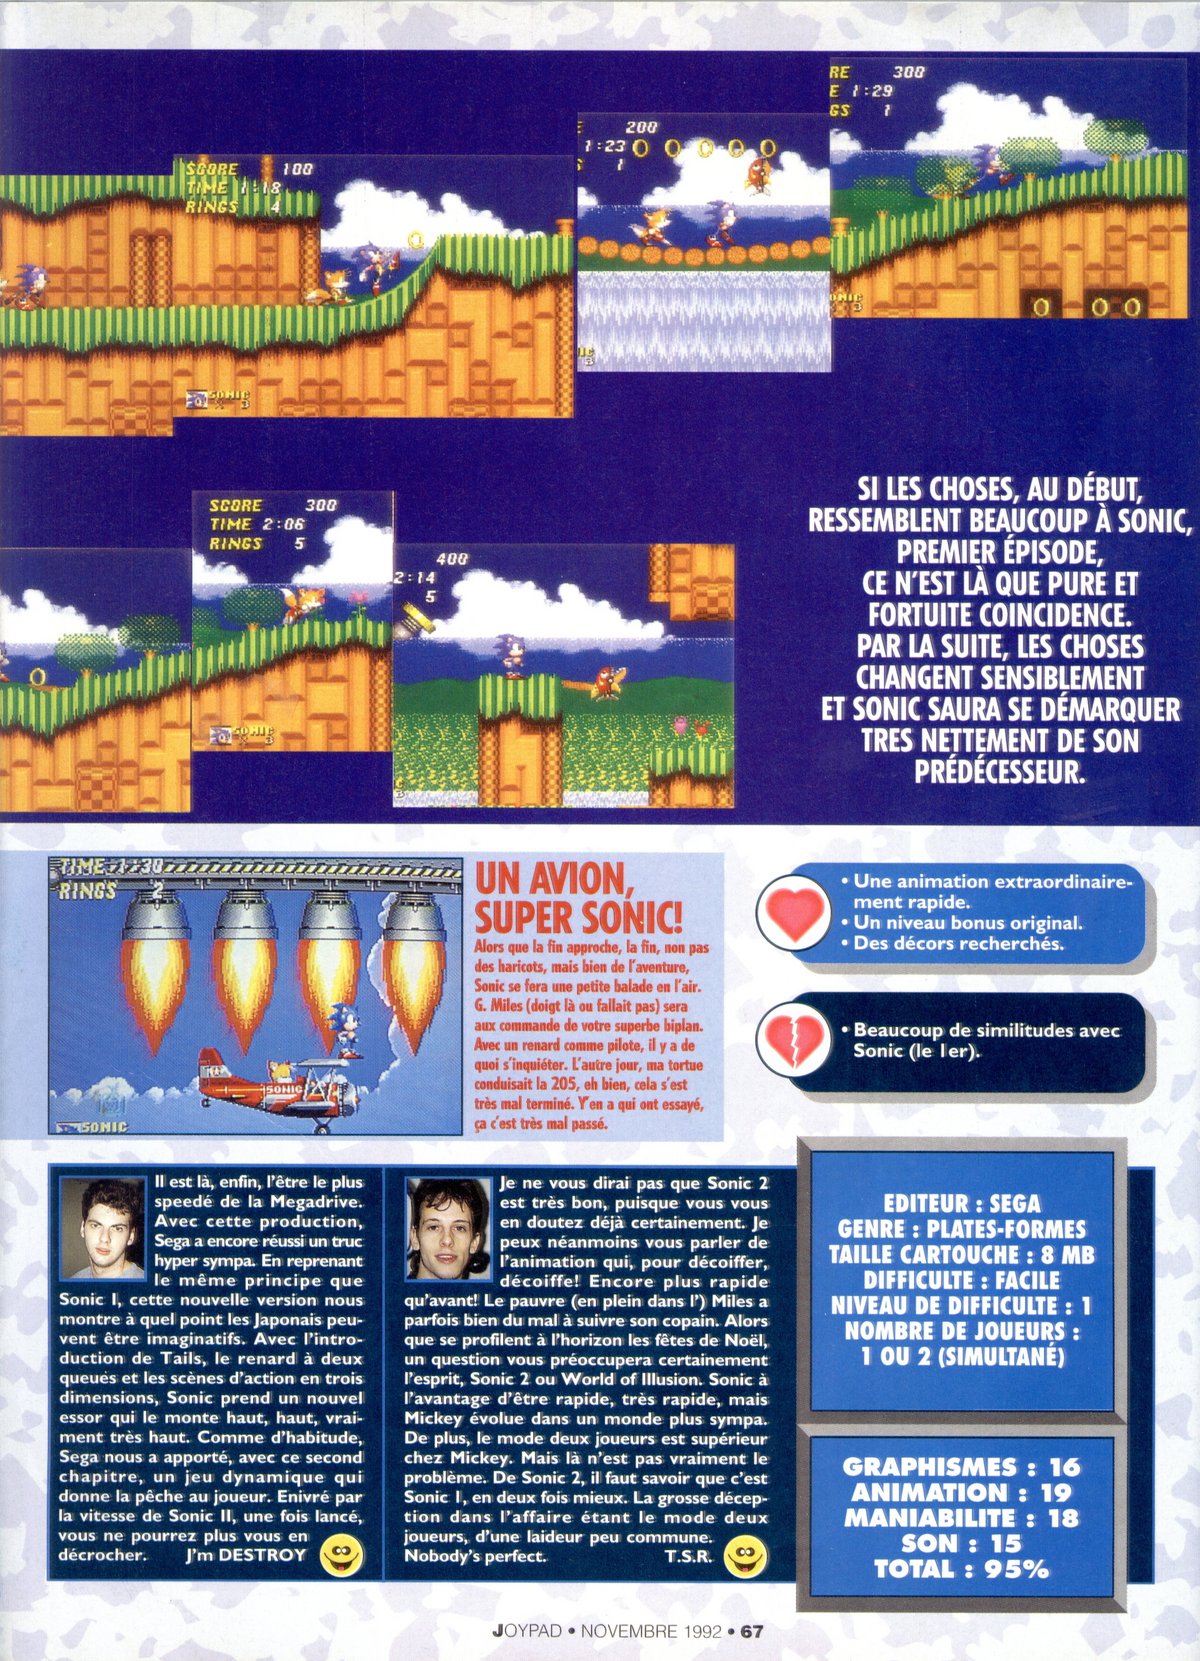 Le test de Sonic 2 dans Joypad (novembre 1992) - via Abandonware.org